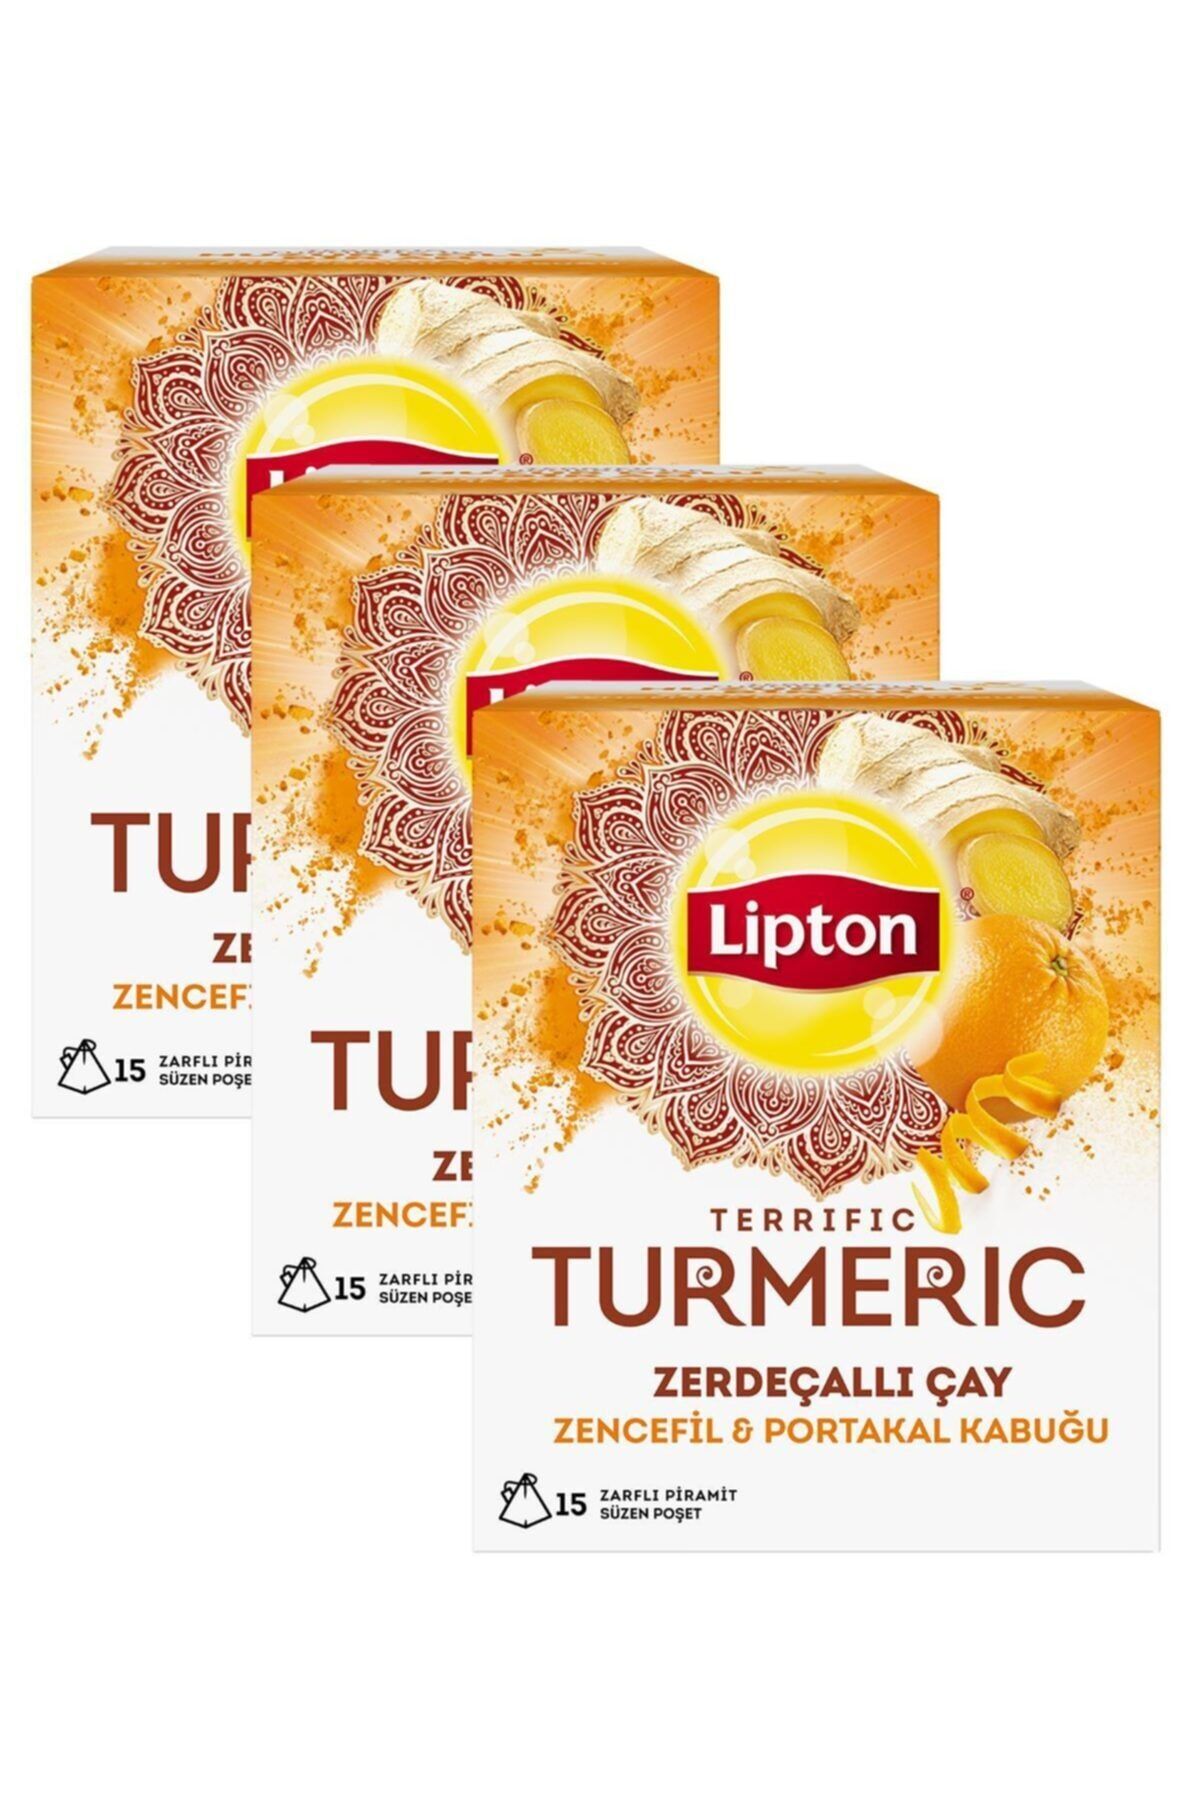 Lipton Turmeric Zerdeçallı Çay 30 gr X 3 Adet